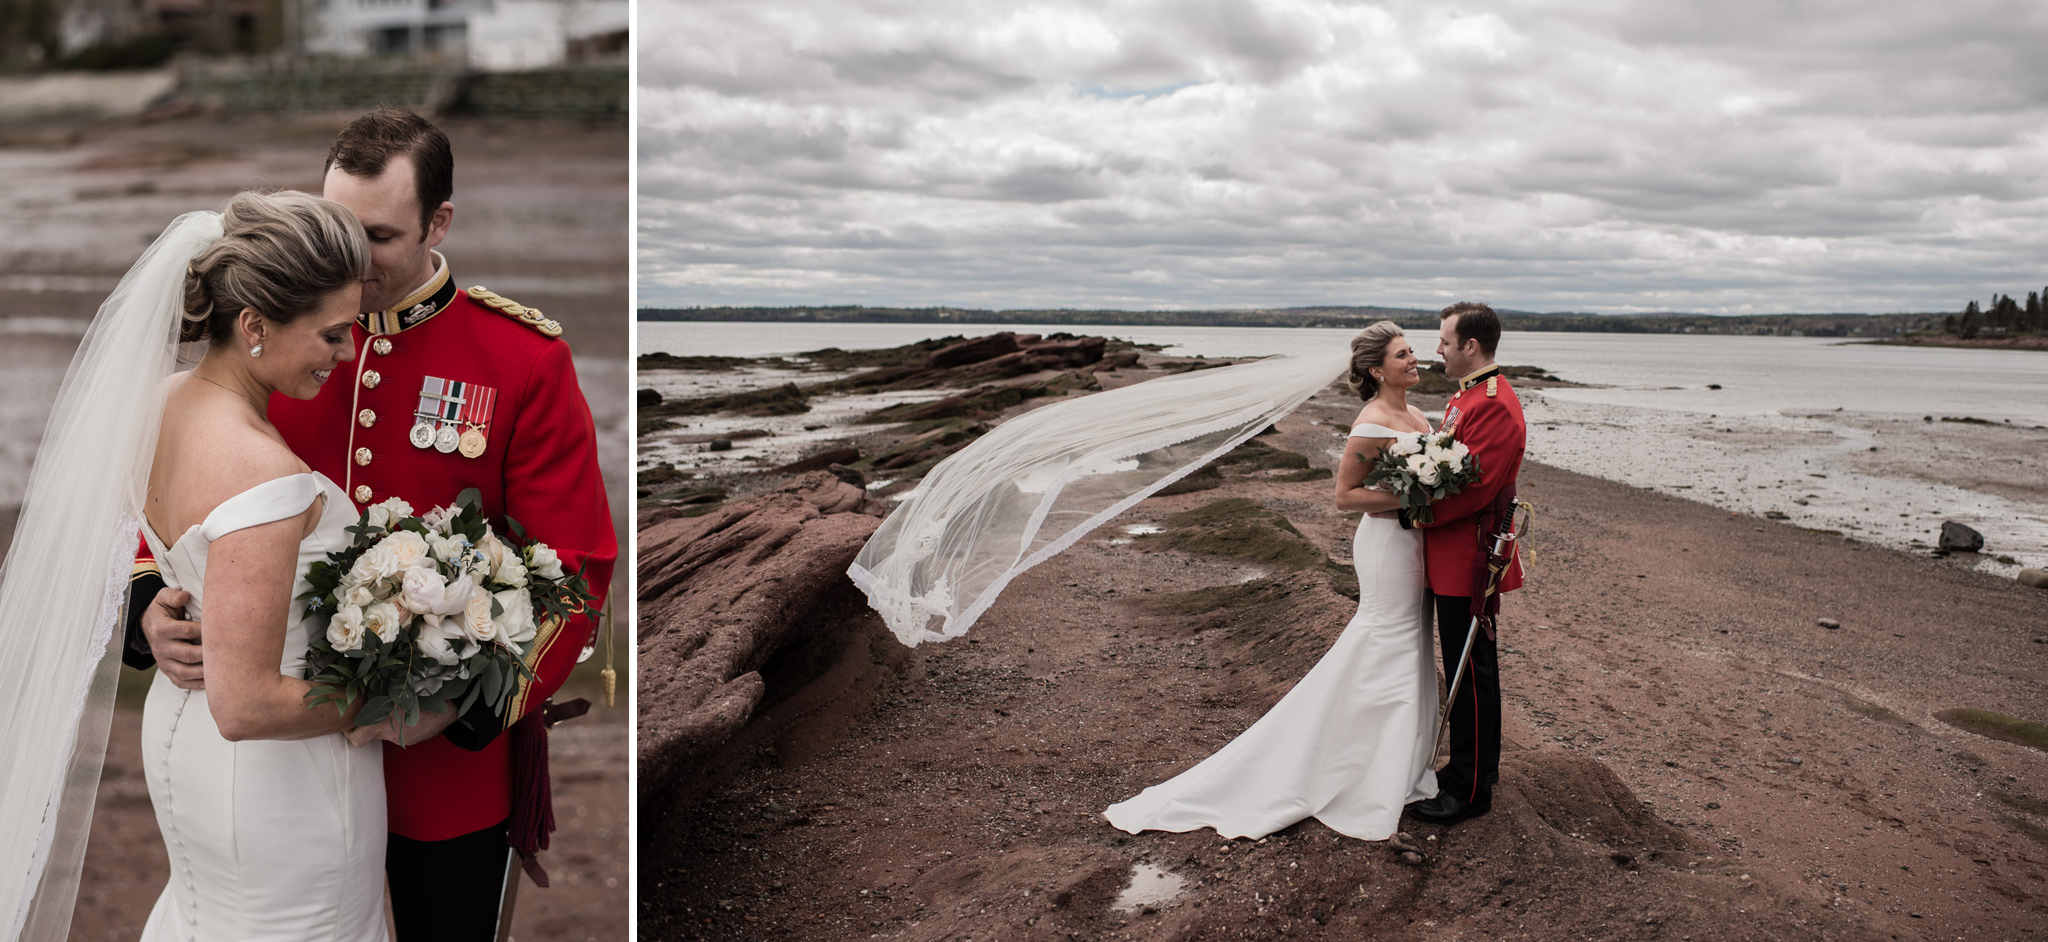 732-bride-groom-photos-wedding-brockhouse-st-andrews-by-the-sea-algonquin-resort.jpg